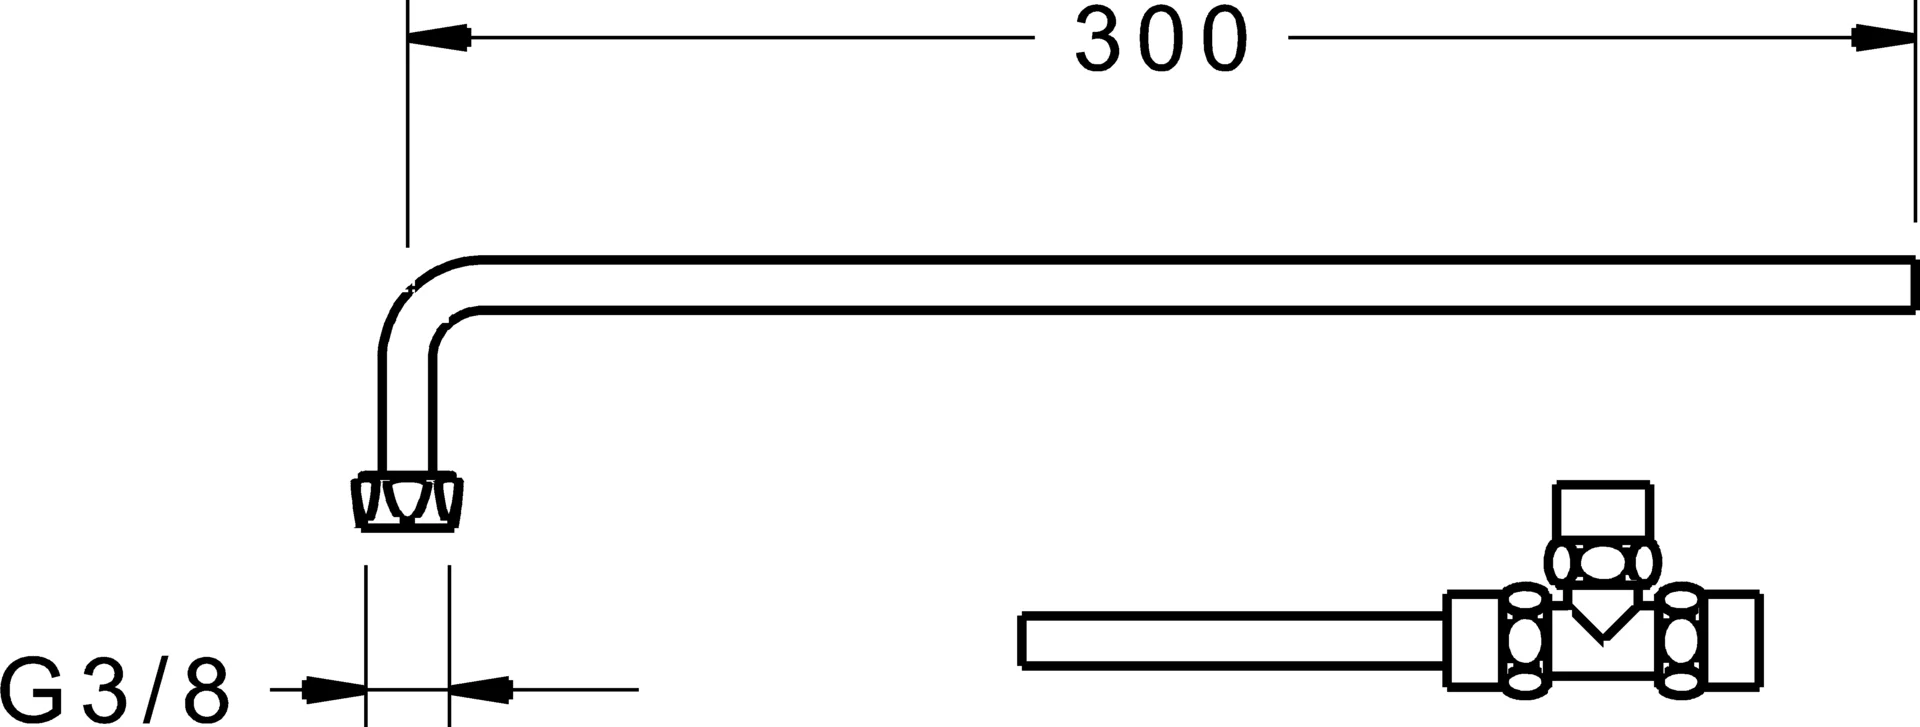 66380100, Anschlussrohr, L=300 mm, HANSAMINIMAT